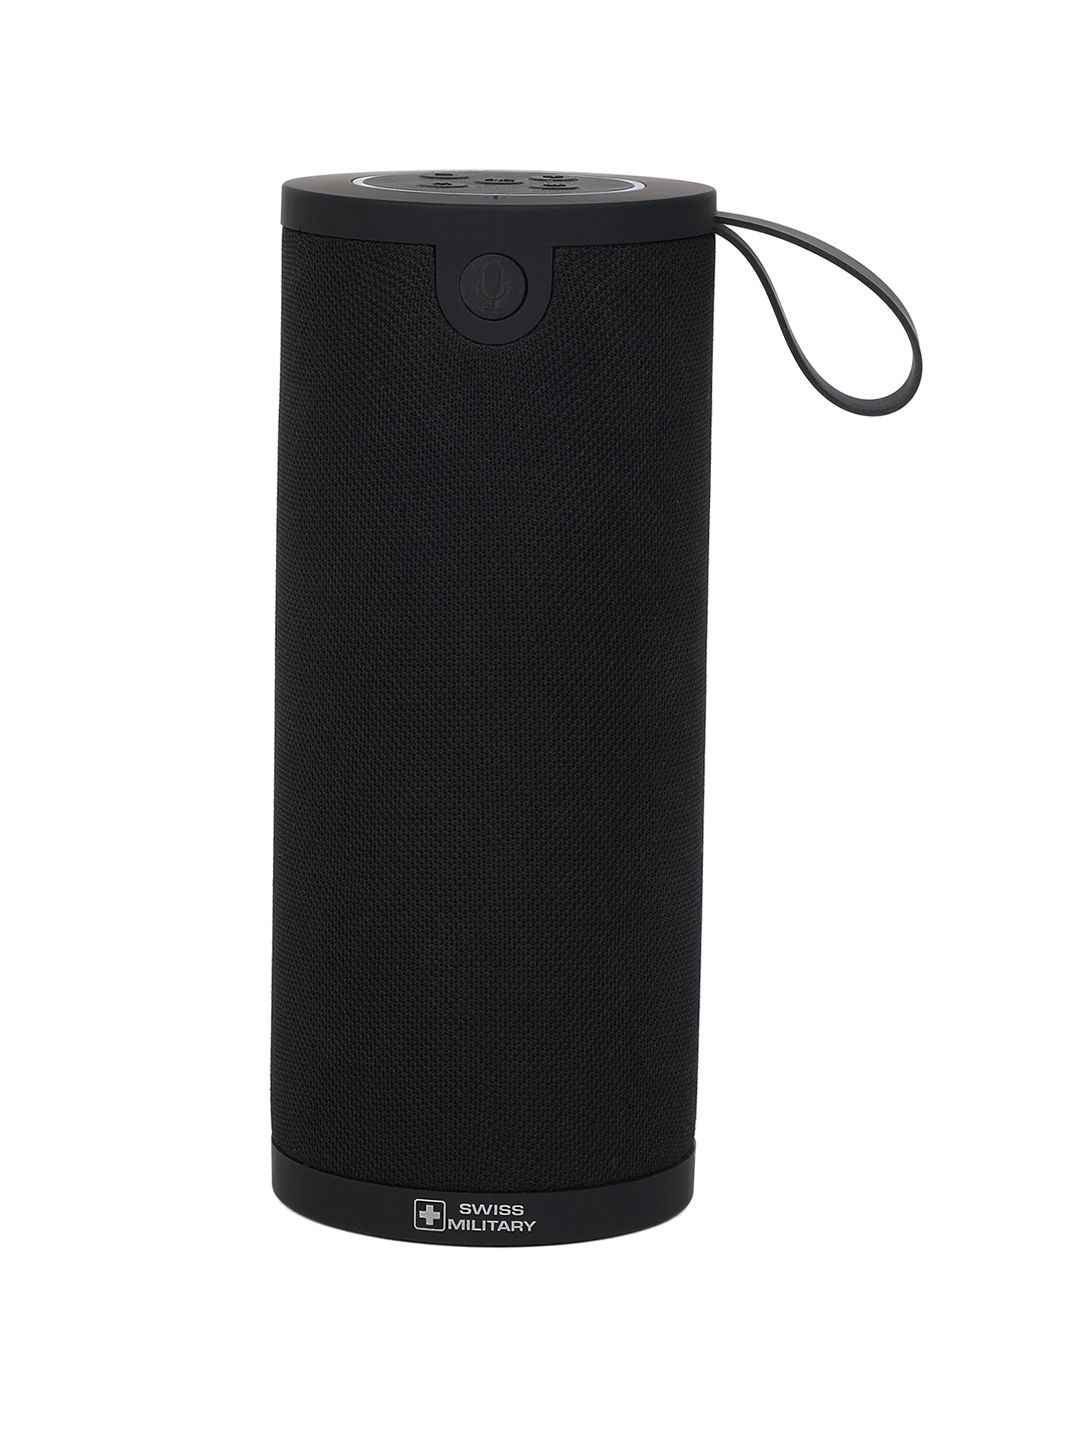 SWISS MILITARY Black Voice Assistant Wireless Speaker TZ01 Price in India